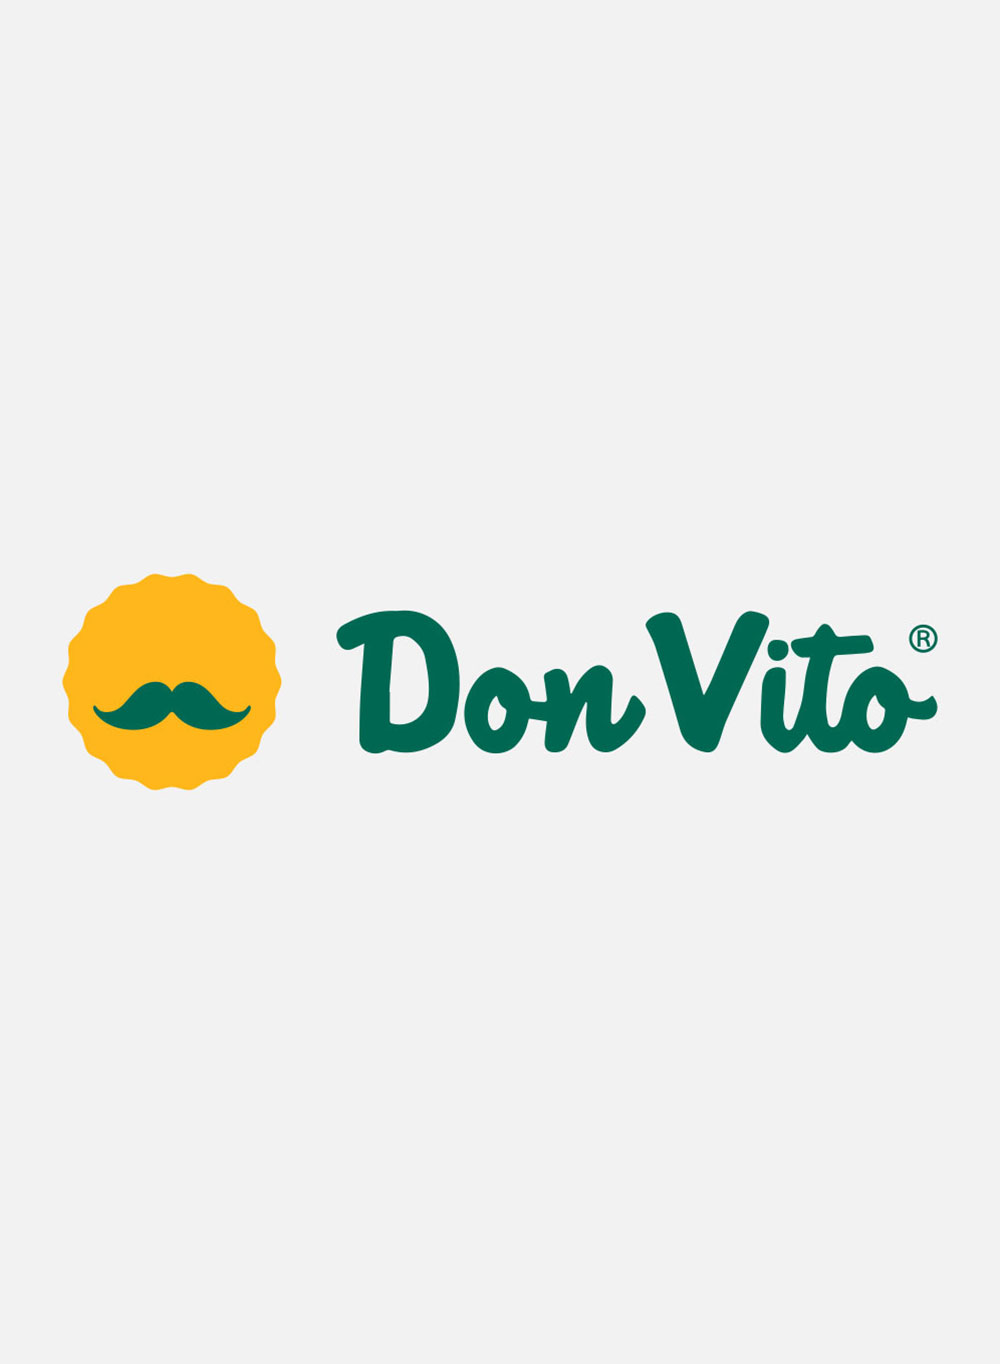 Don Vito rebrand